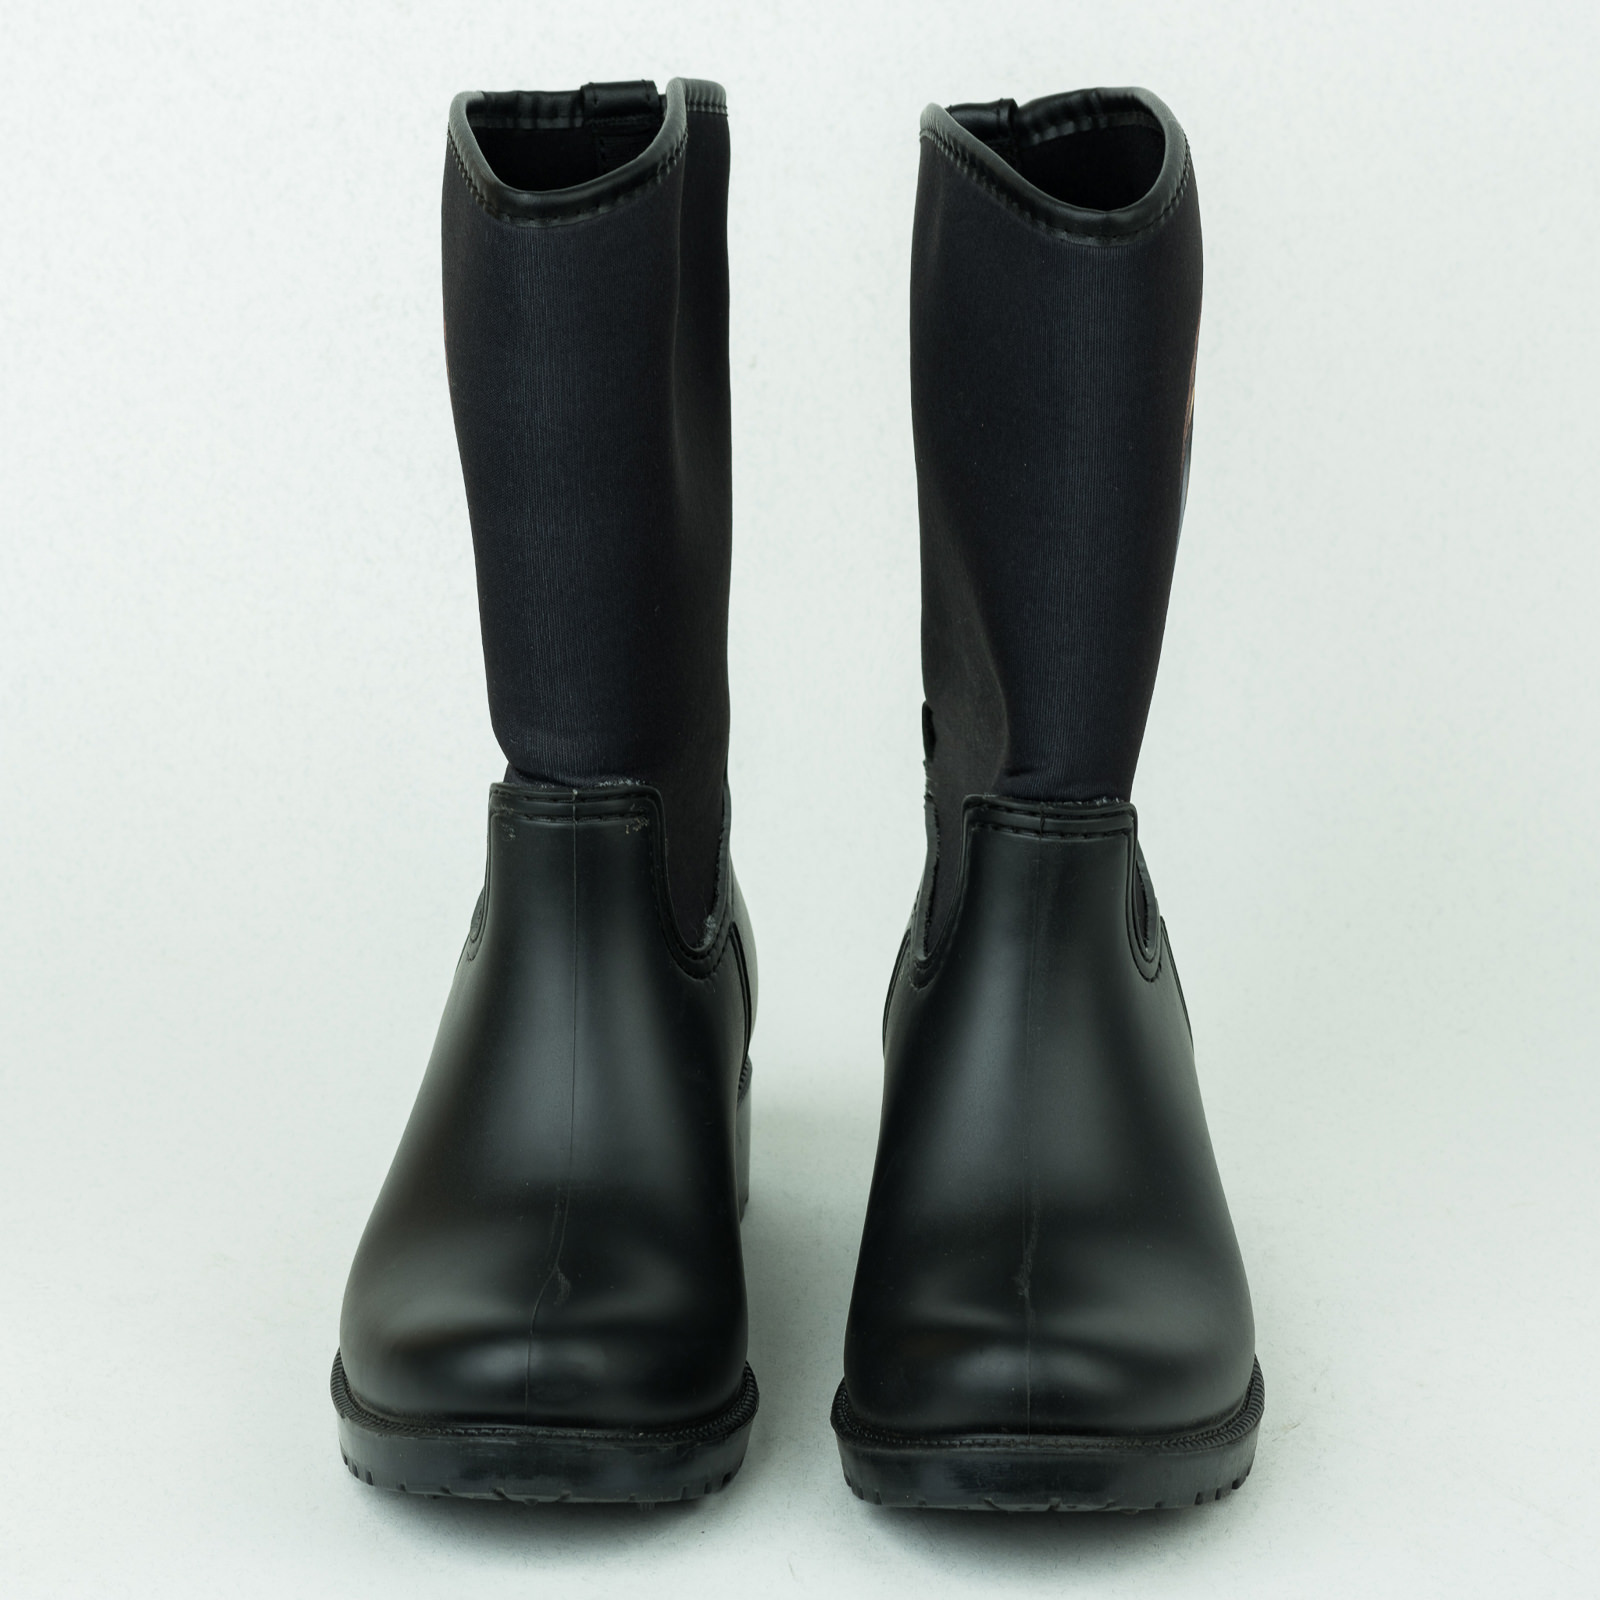 Waterproof boots B380 - BLACK